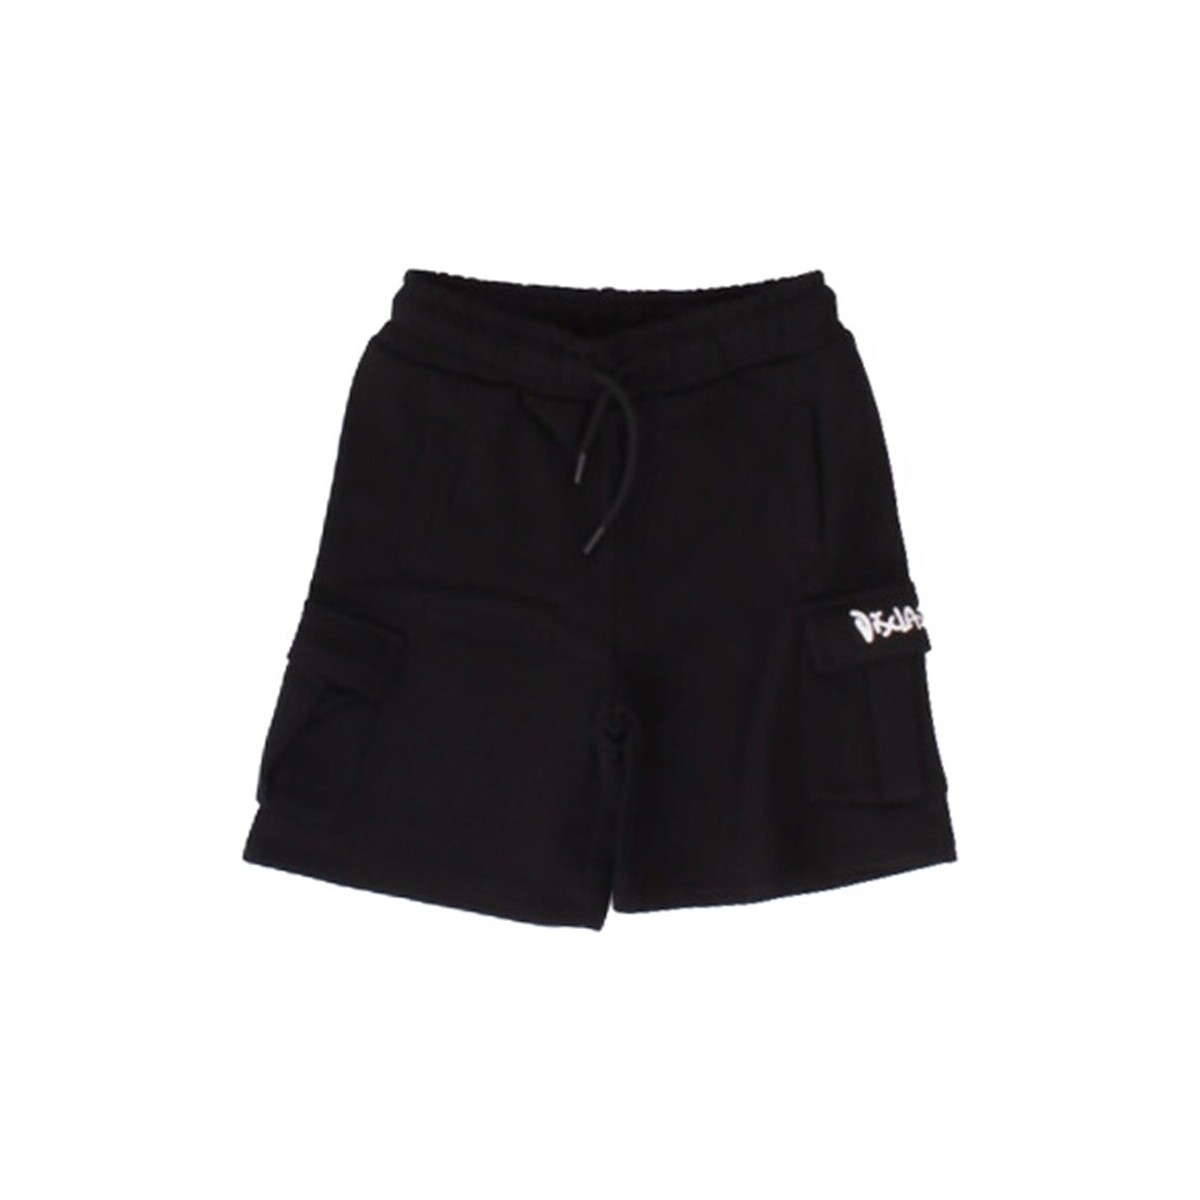 textil Niños Shorts / Bermudas Disclaimer 58024 Negro